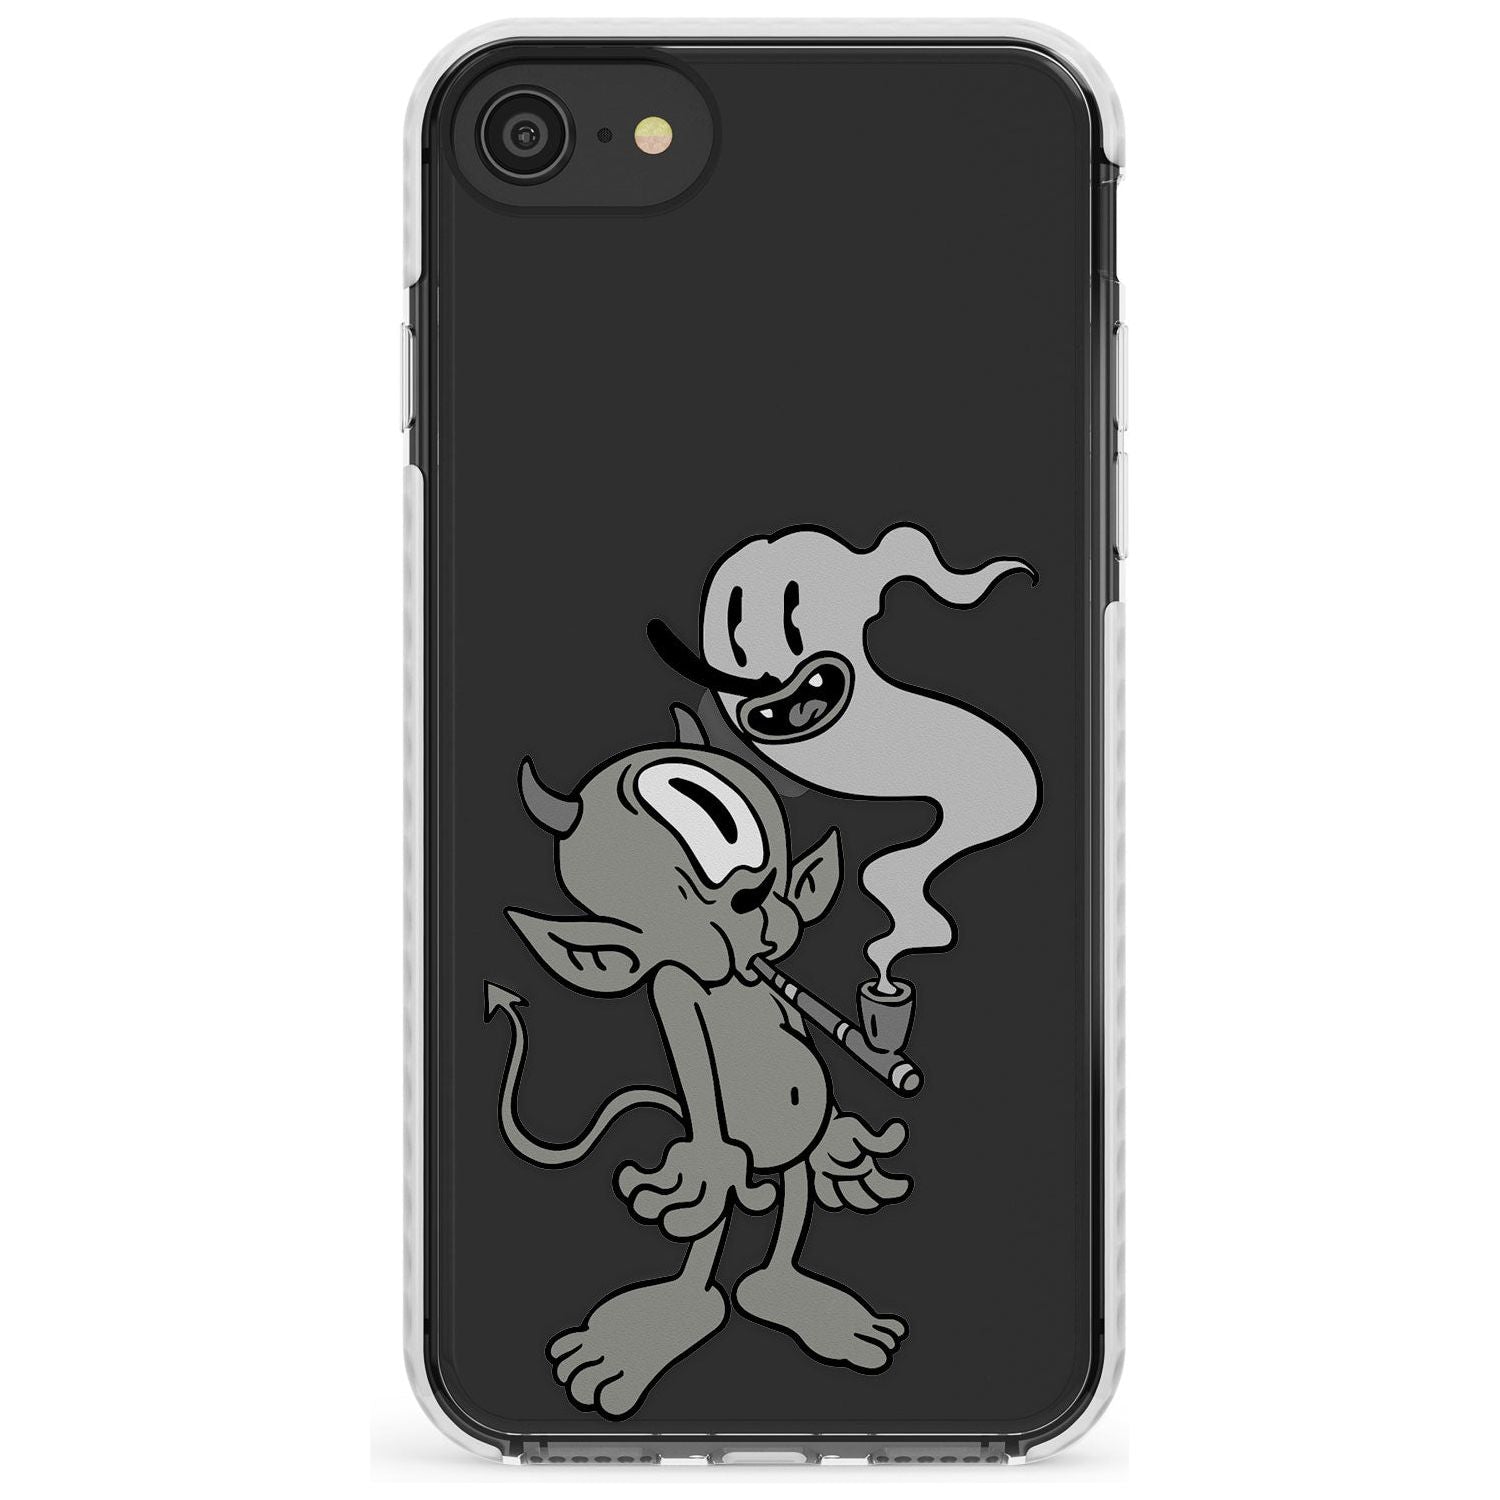 Pipe Goblin Impact Phone Case for iPhone SE 8 7 Plus